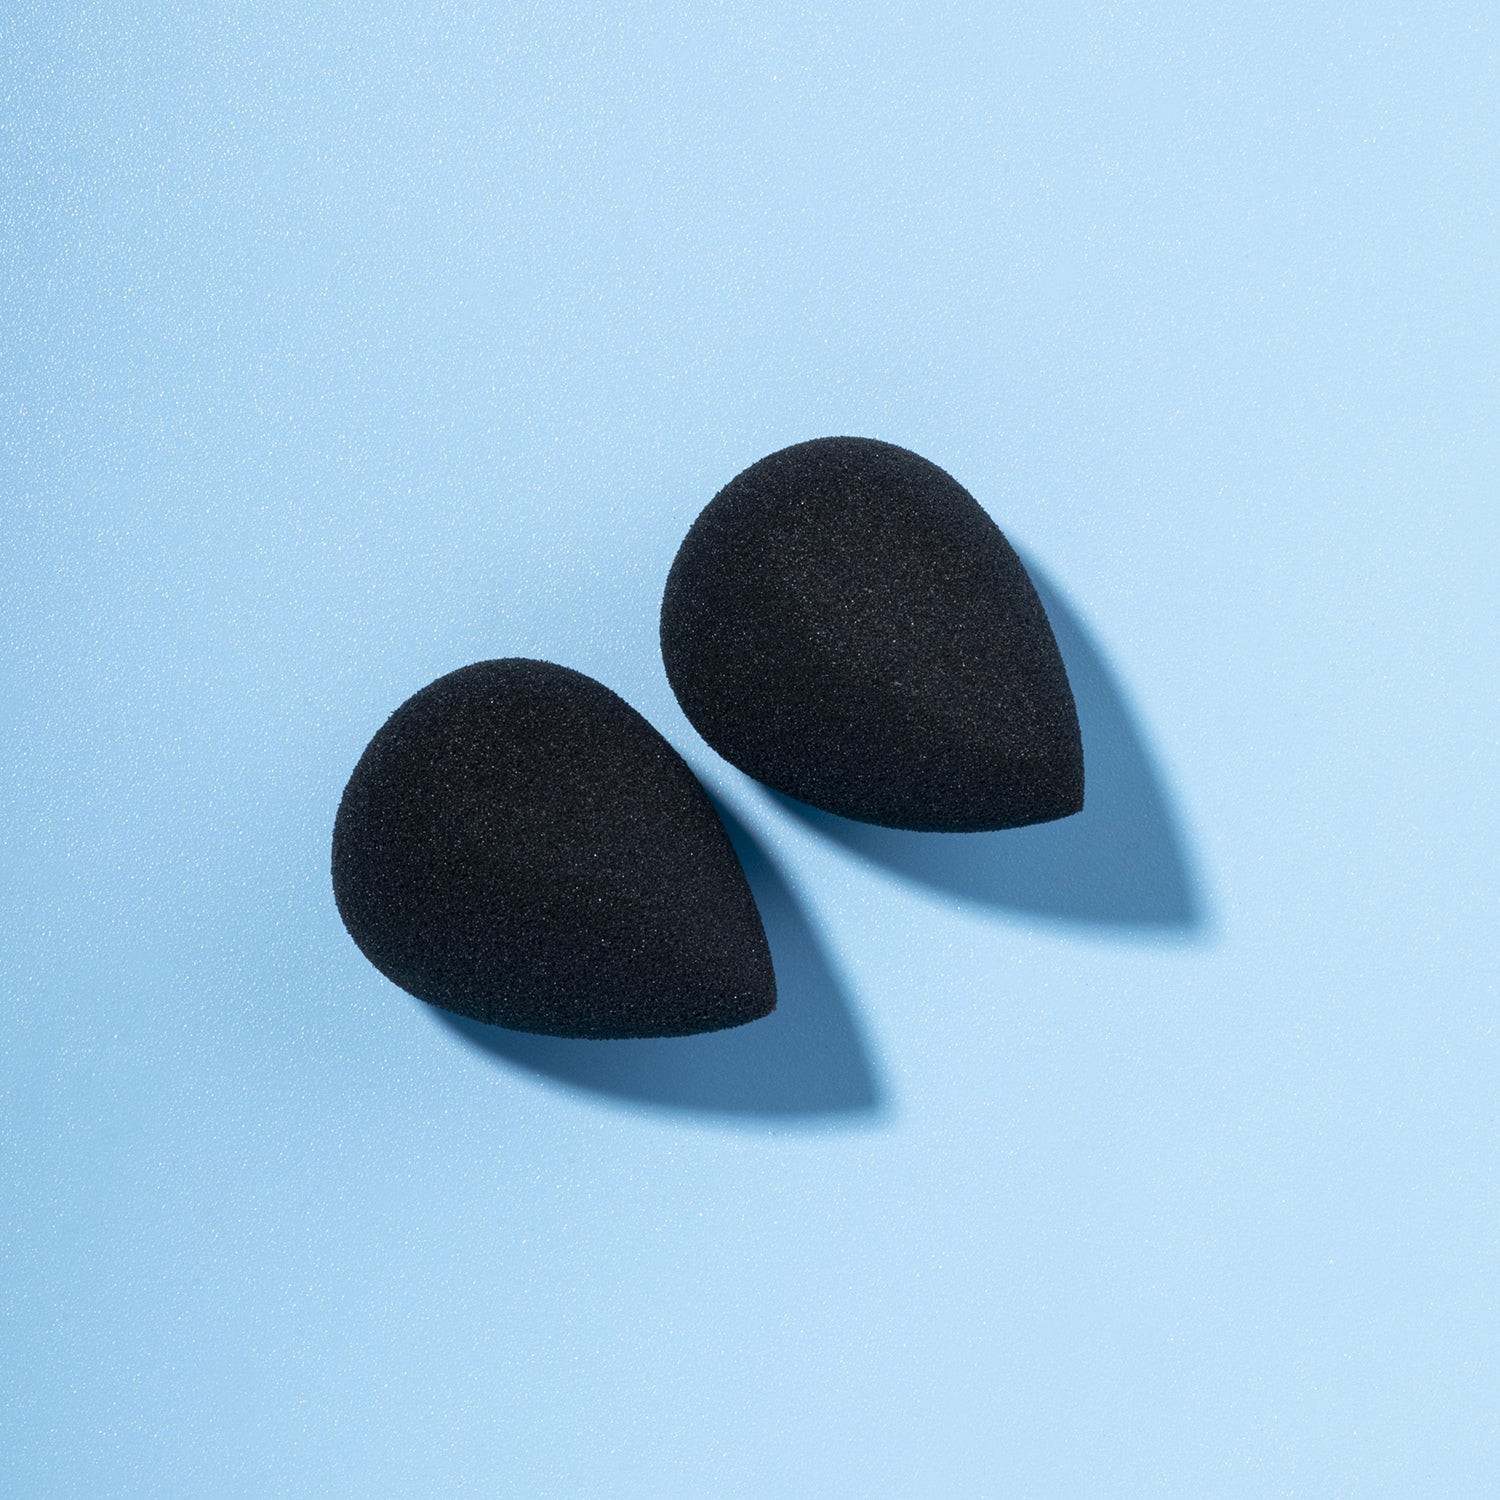 PAC Cosmetics Mini Sponge Set (Water Drop) (Black) (2 Pc)